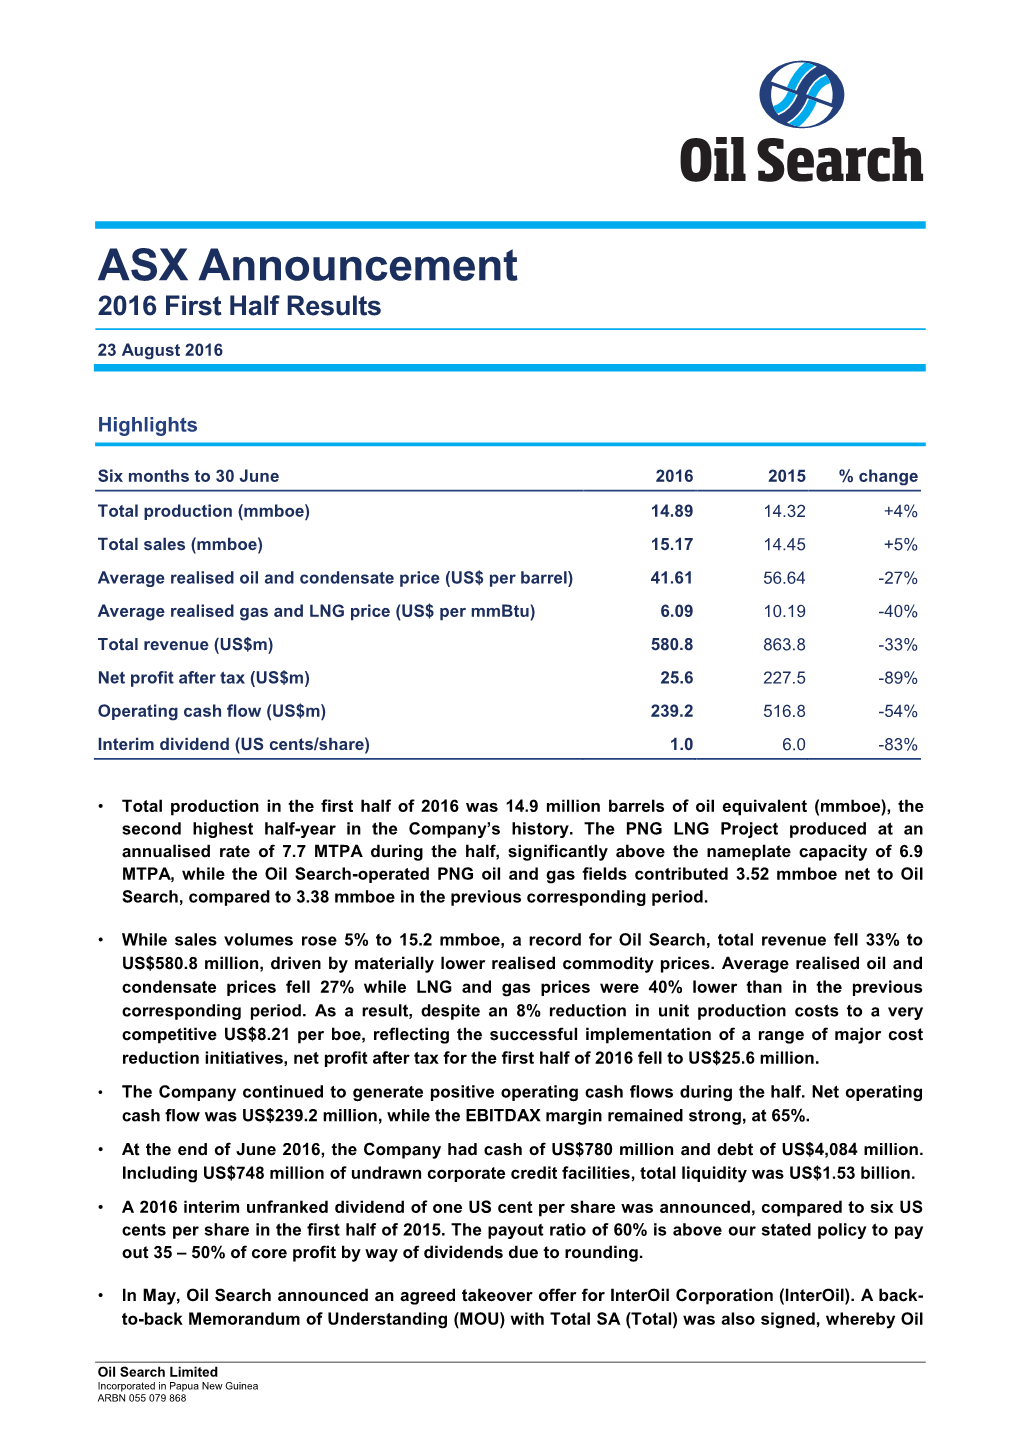 ASX Announcement 2016 First Half Results